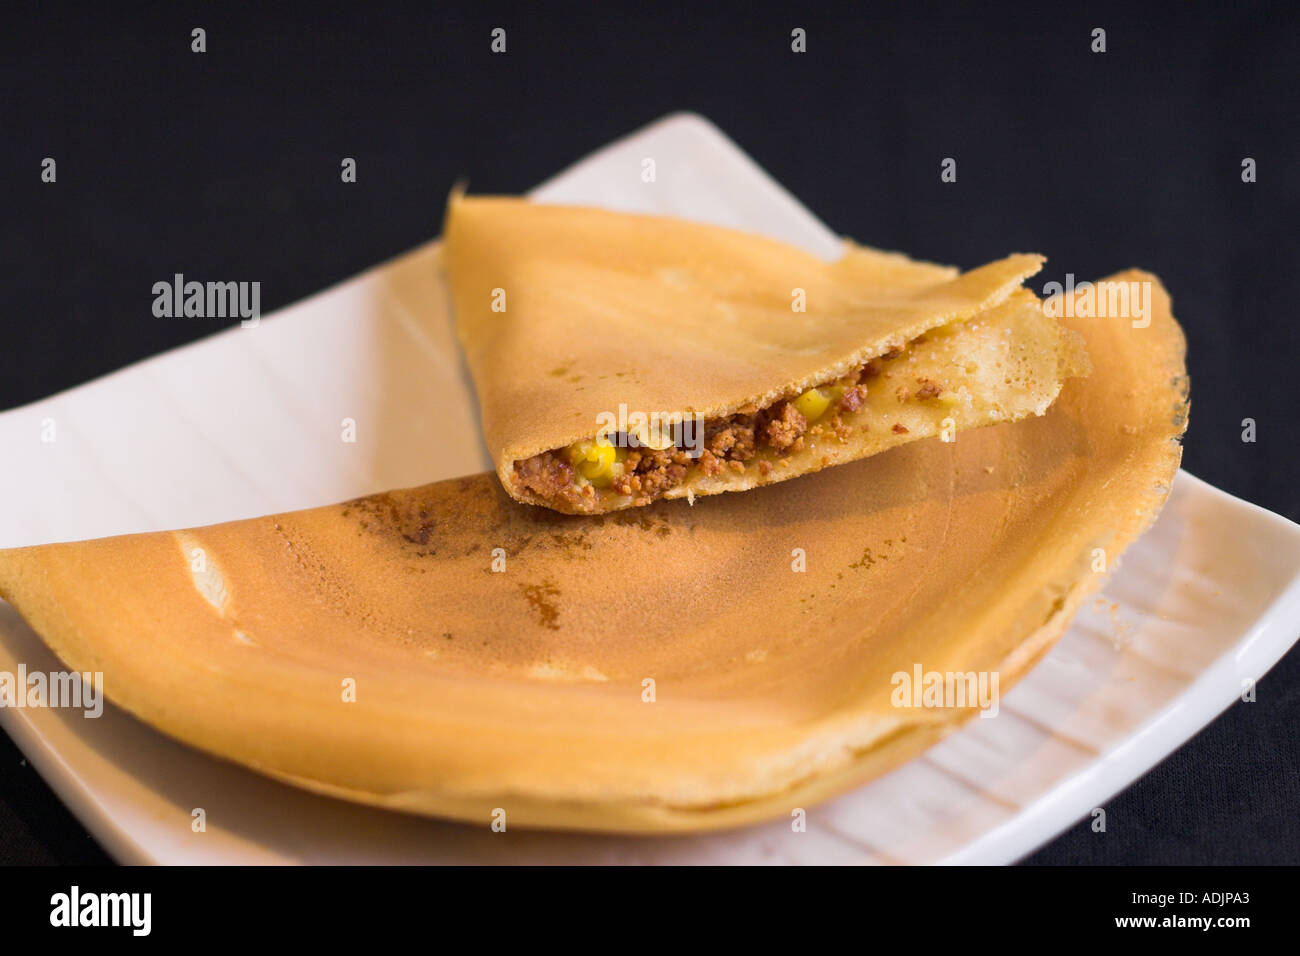 malaysian-peanut-pancake-abong-balik-with-corn-ADJPA3.jpg